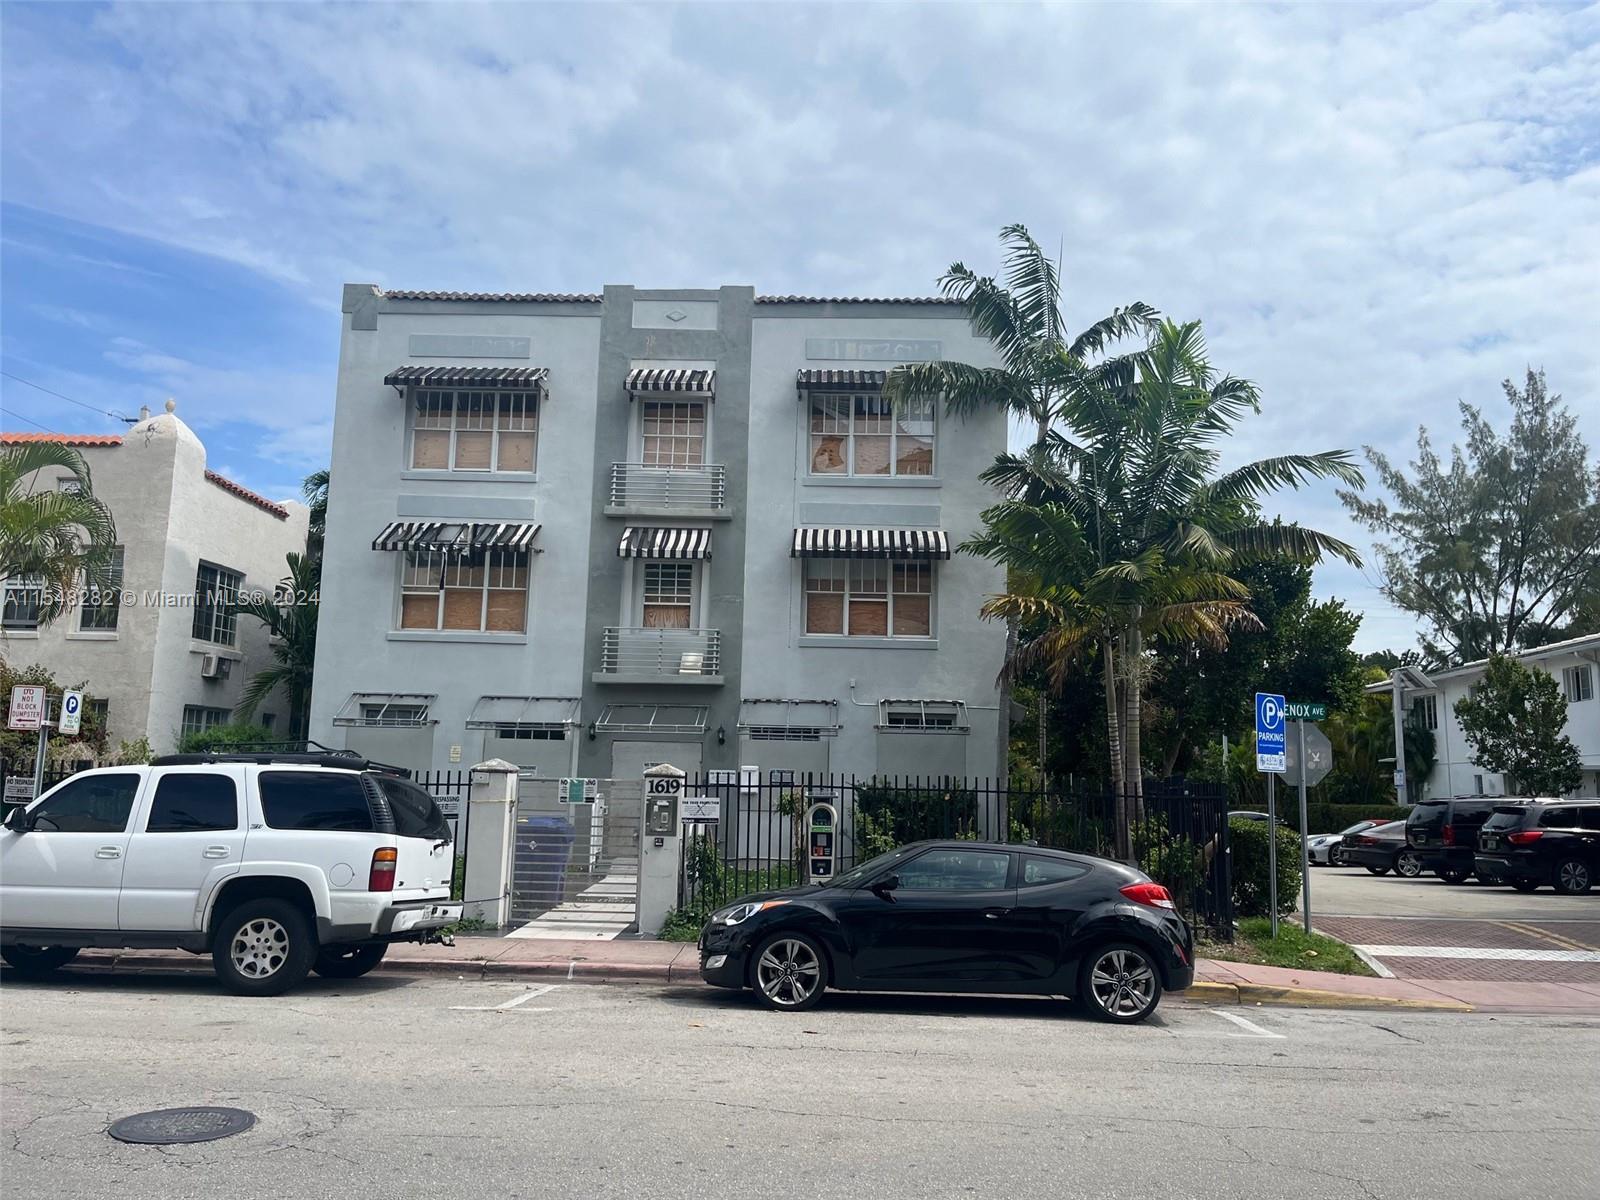 Photo of 1619 Lenox Ave #17 in Miami Beach, FL